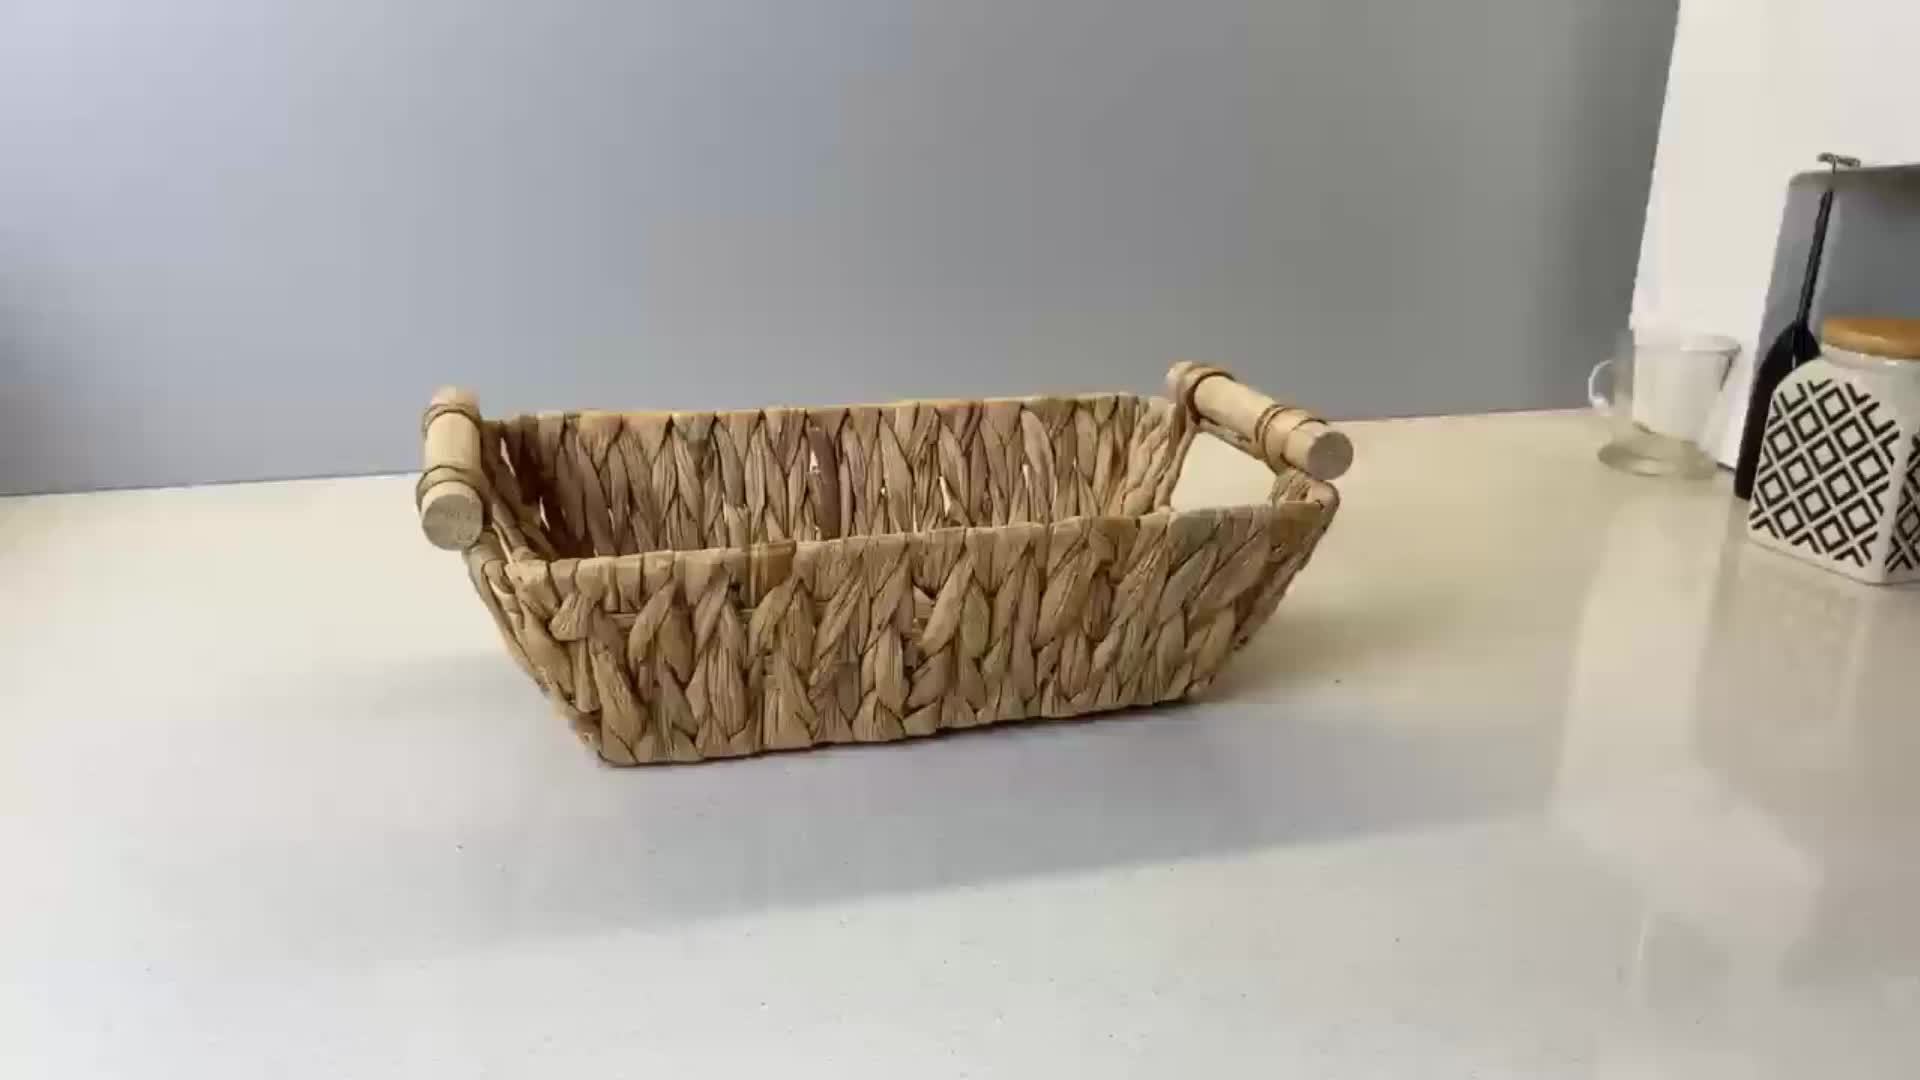 VATIMA Hyacinth Small Wicker Basket 11.6x8.1x4.9 - Bathroom Organizer,  Wooden Handle, Decorative Storage